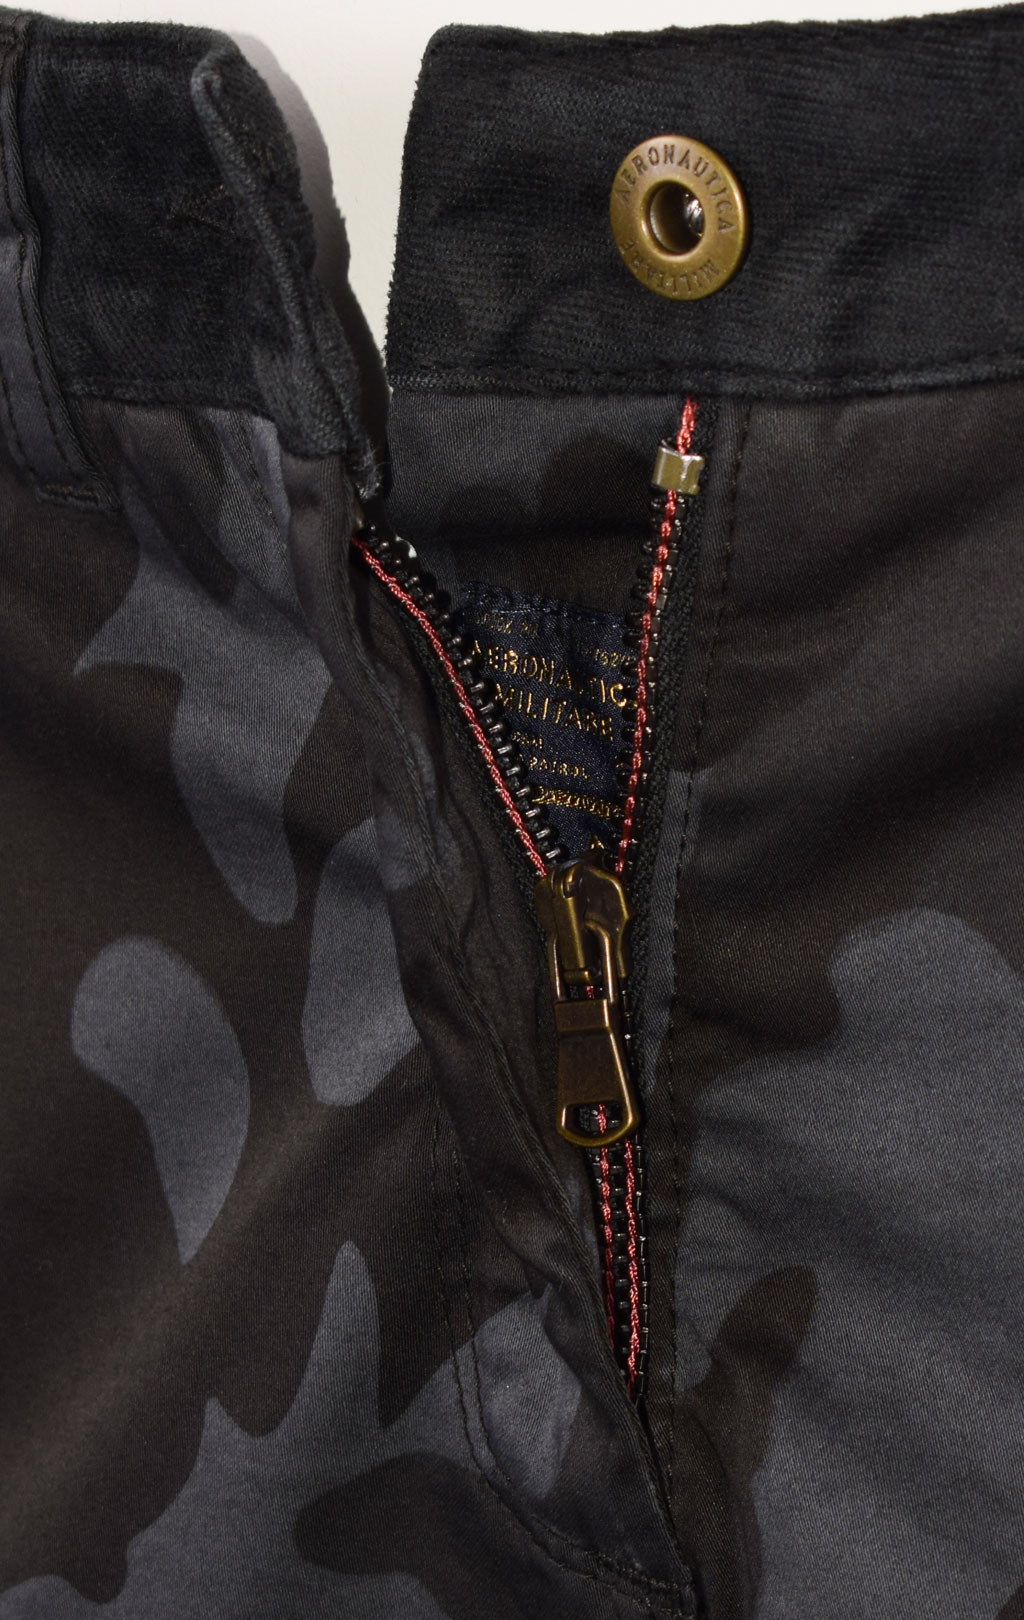 Женские брюки-карго AERONAUTICA MILITARE FW 22/23/AL camouflage nero (PA 1498) 